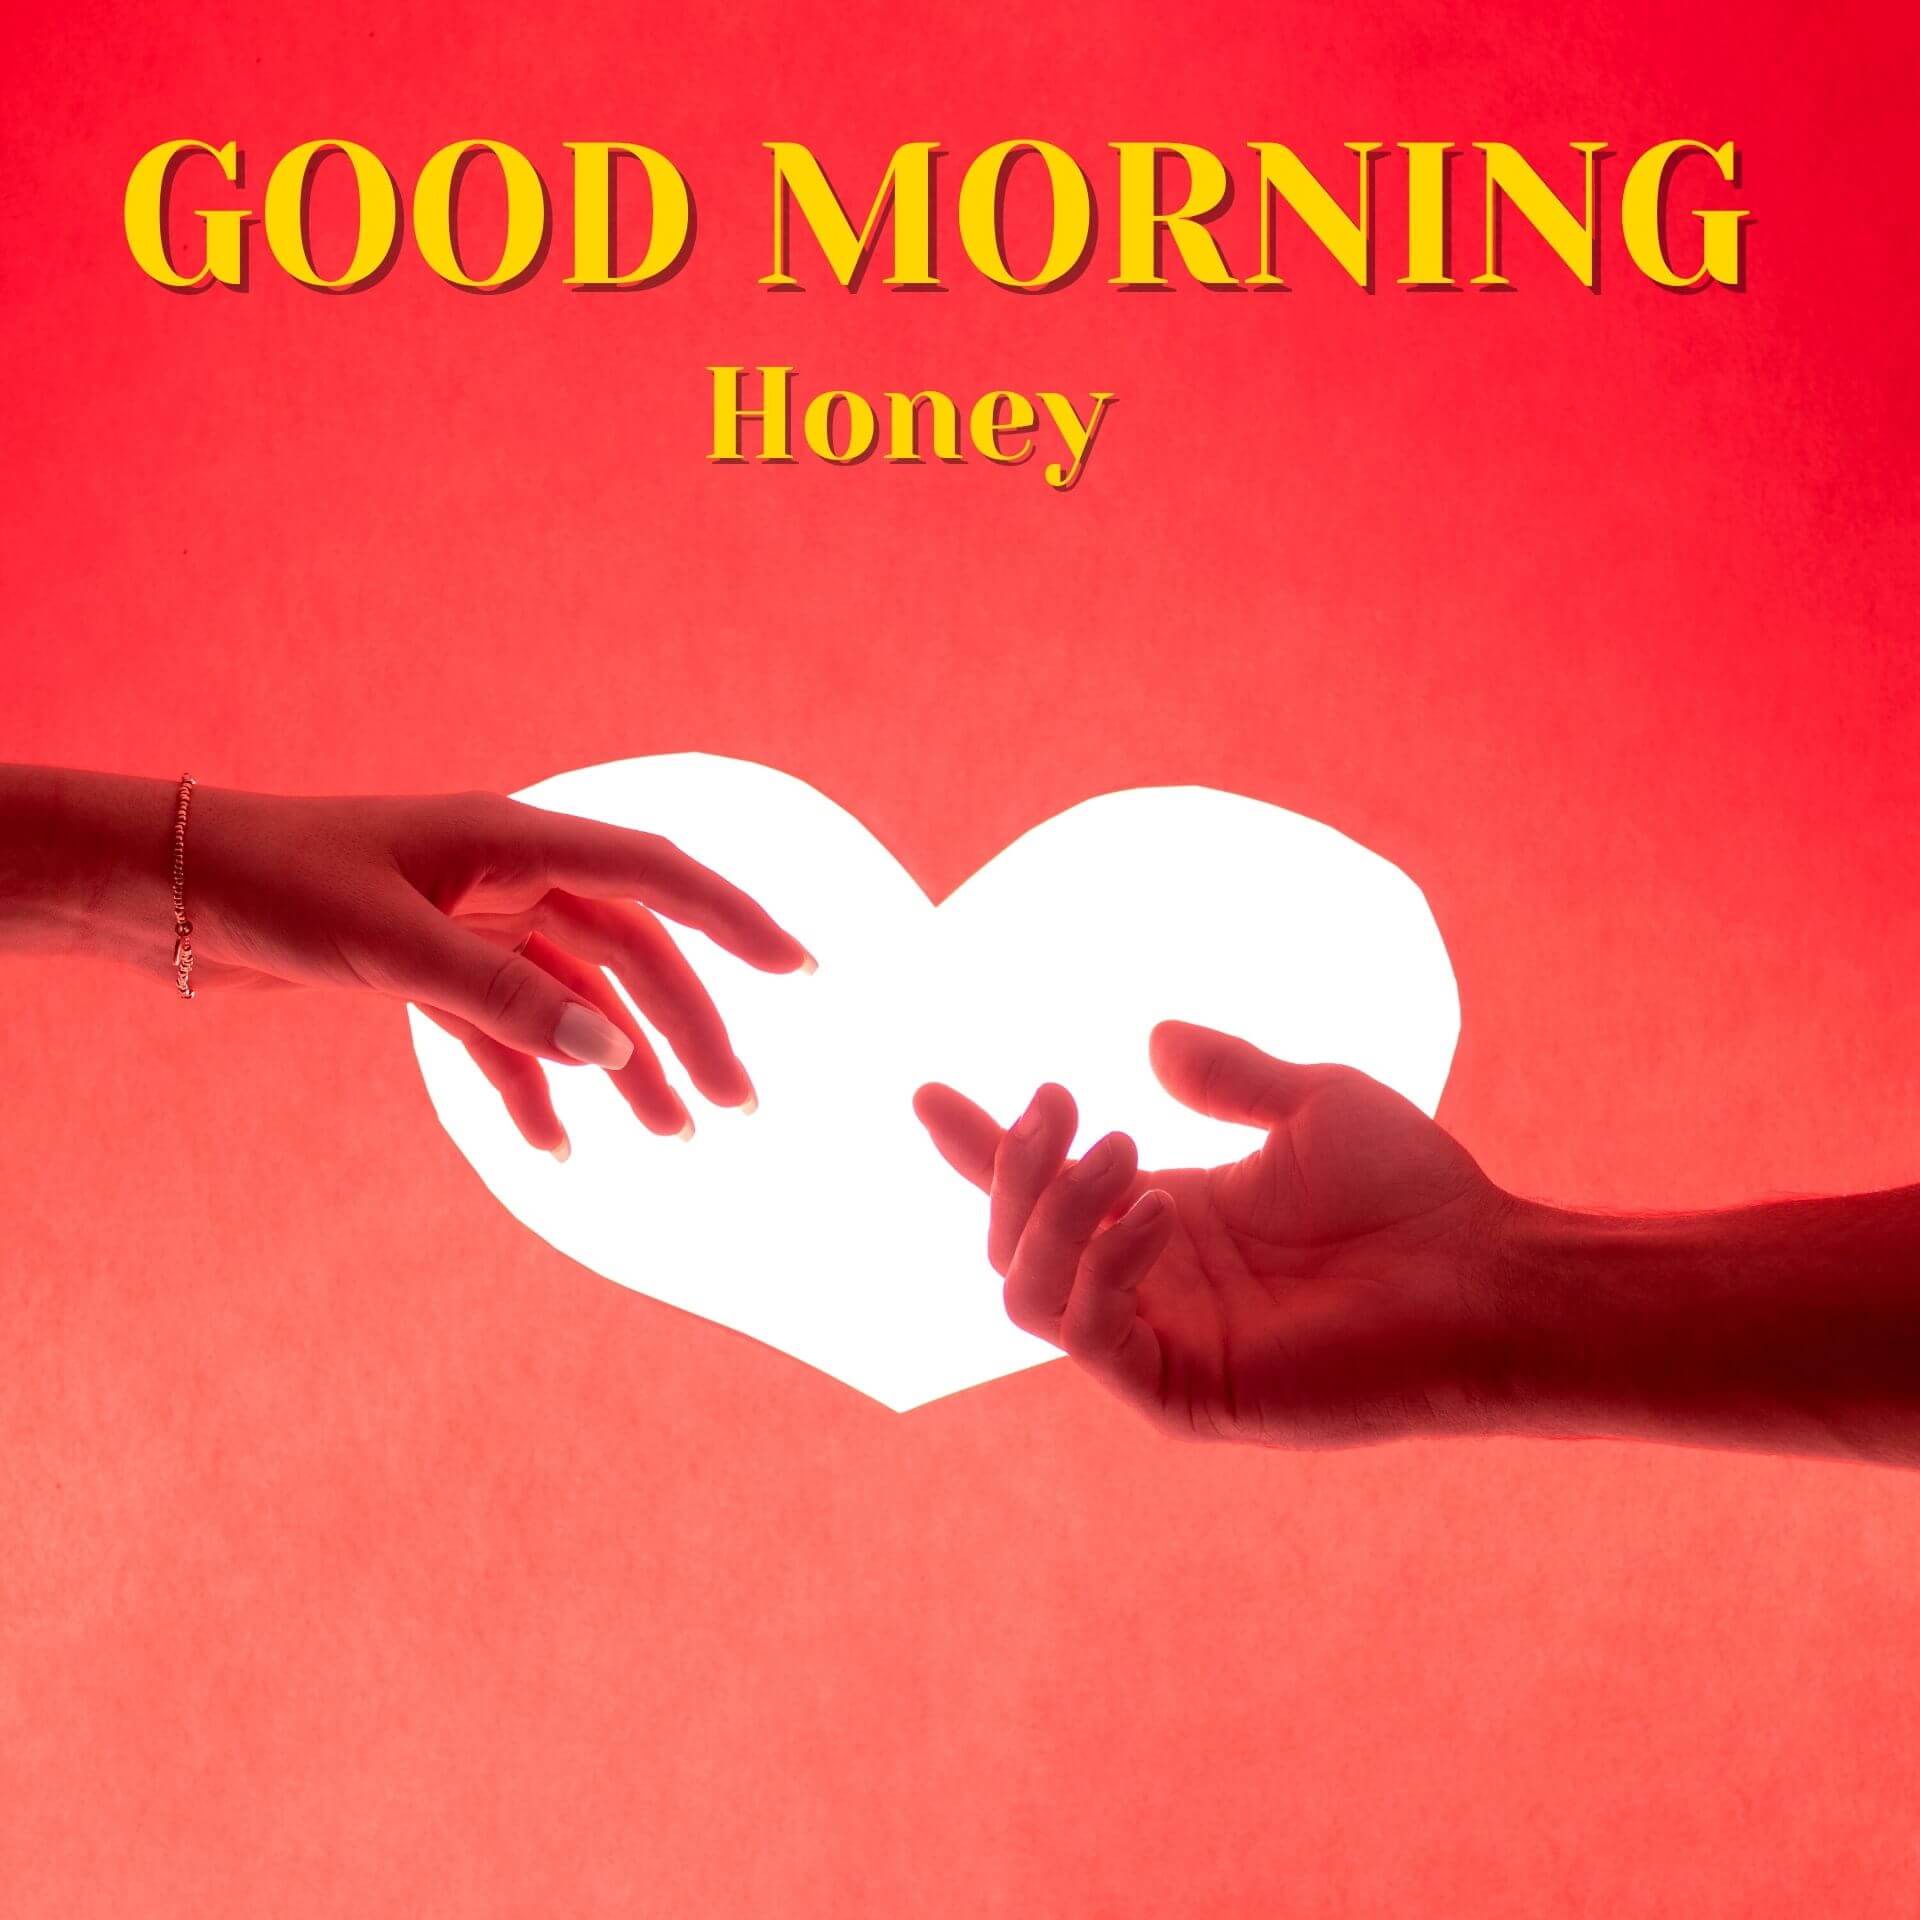 Good Morning Honey Images